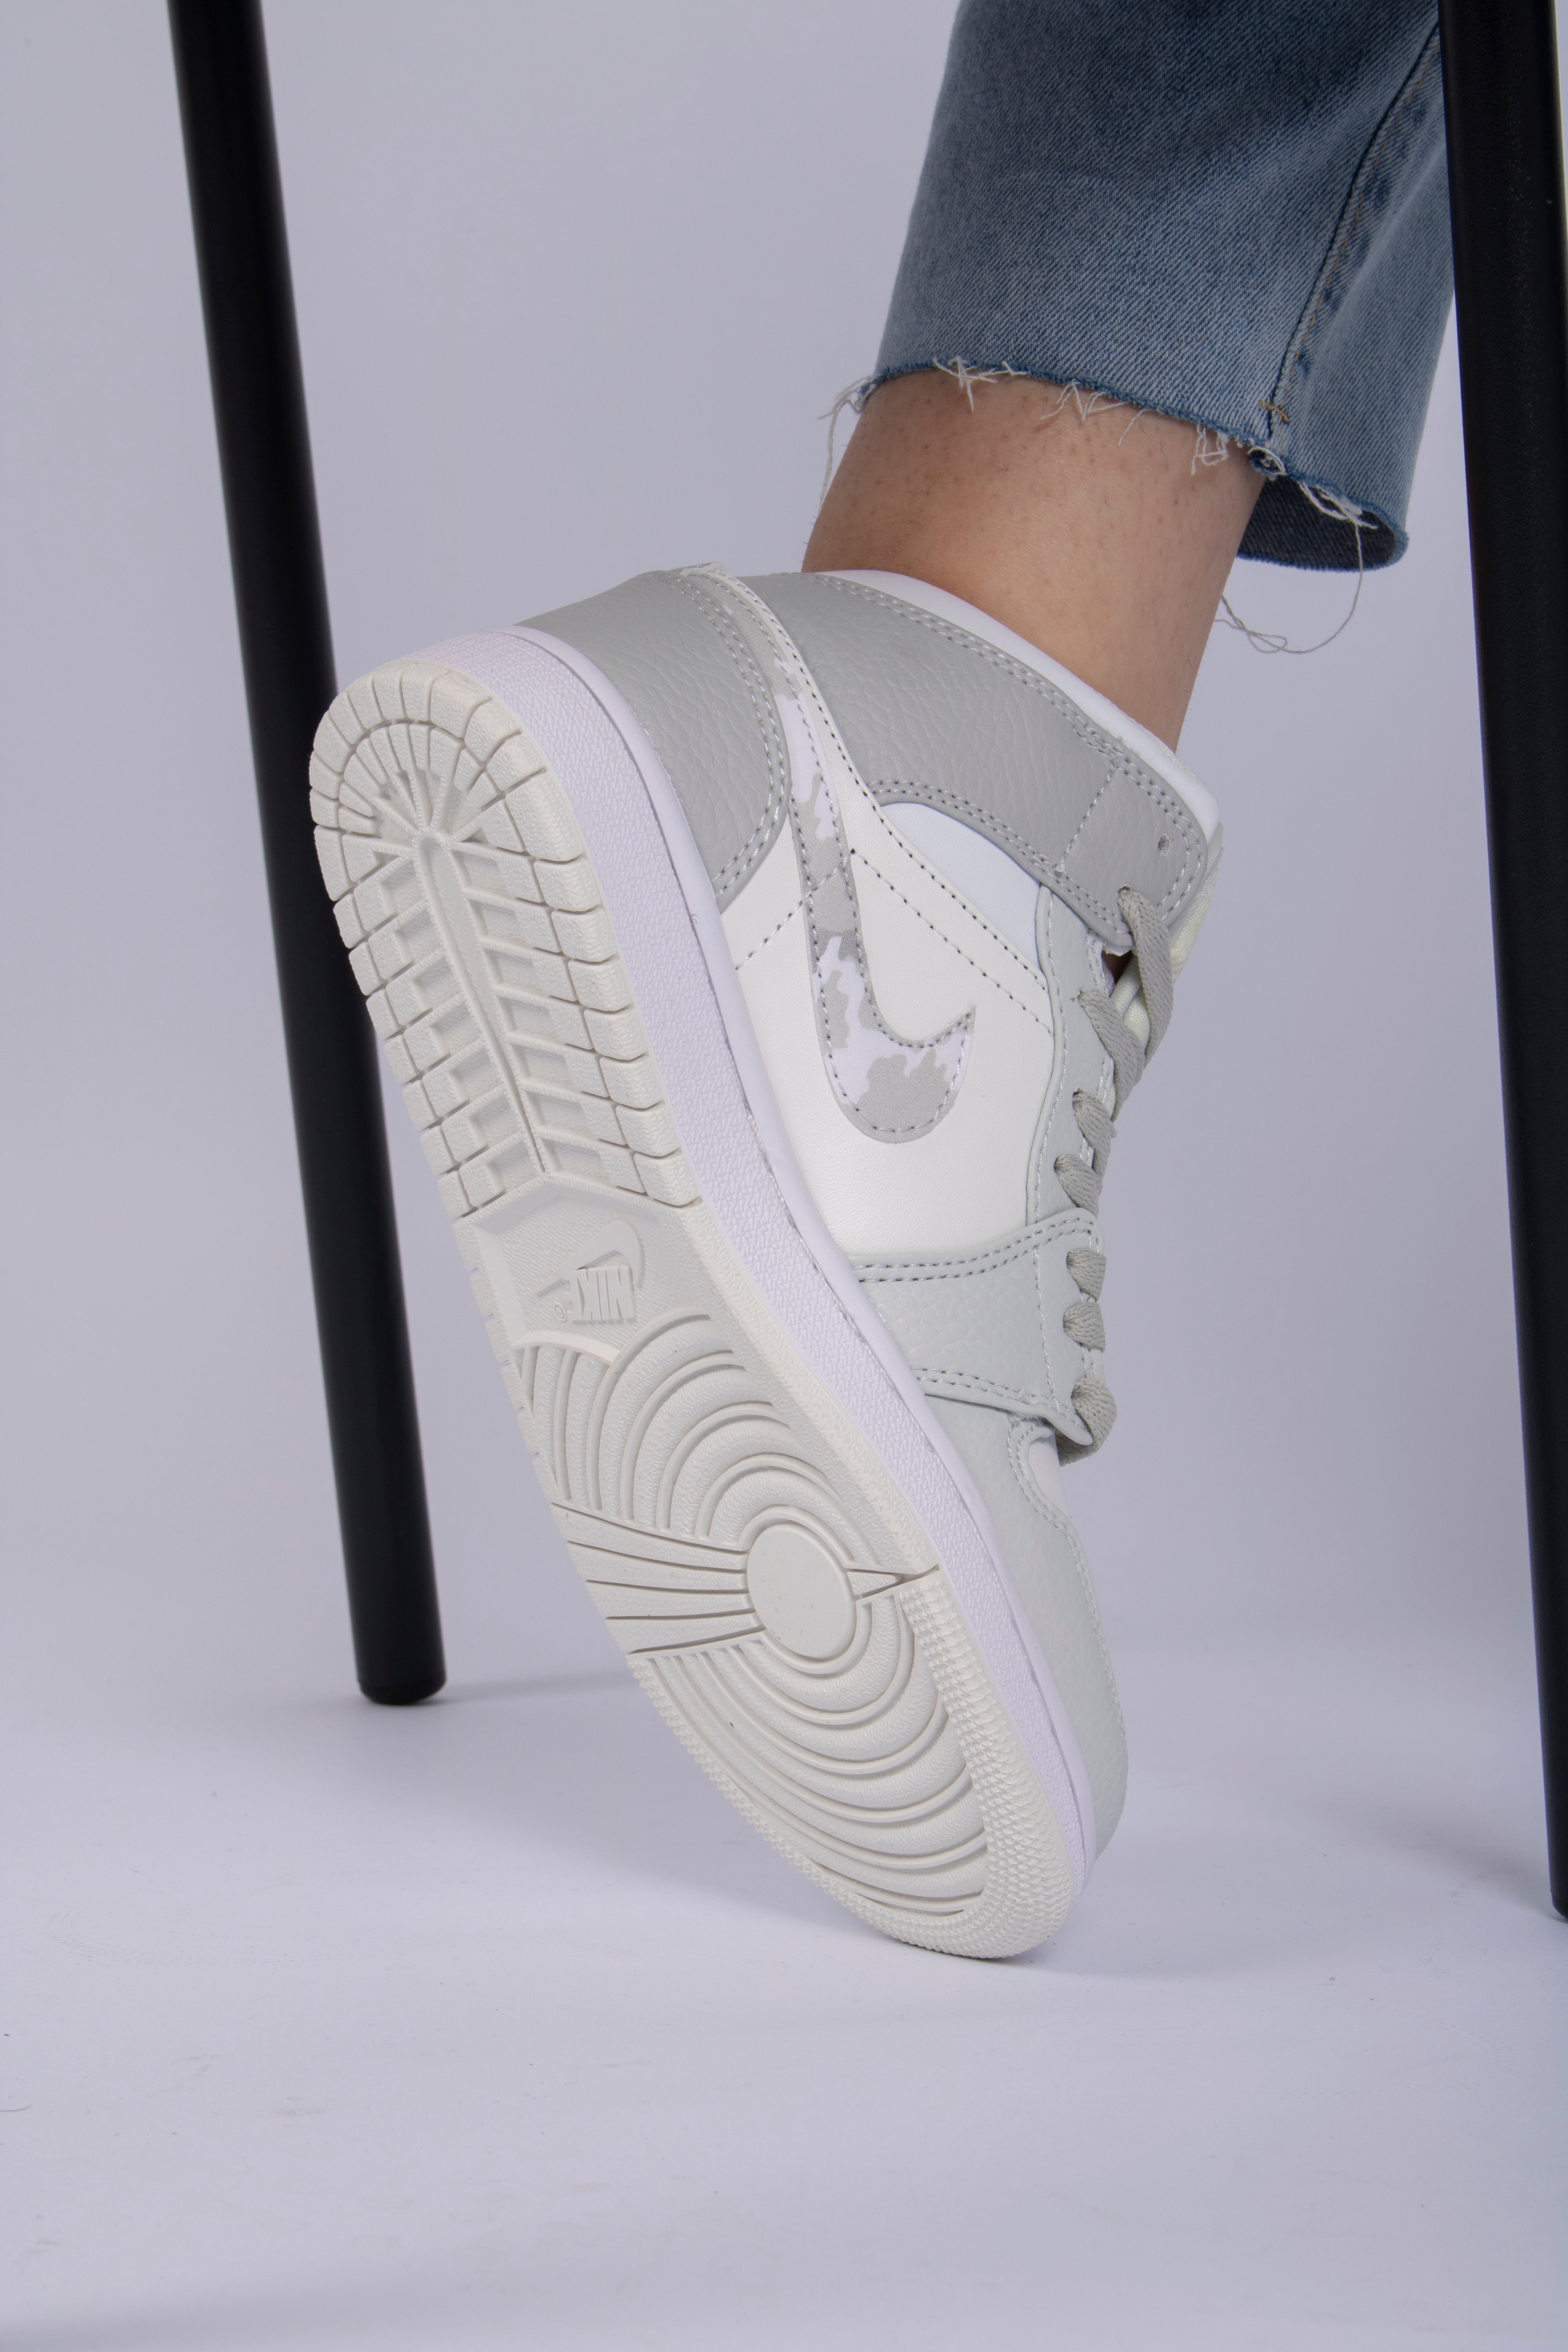 Nike Air Jordan 1 OG “Grey Camo”